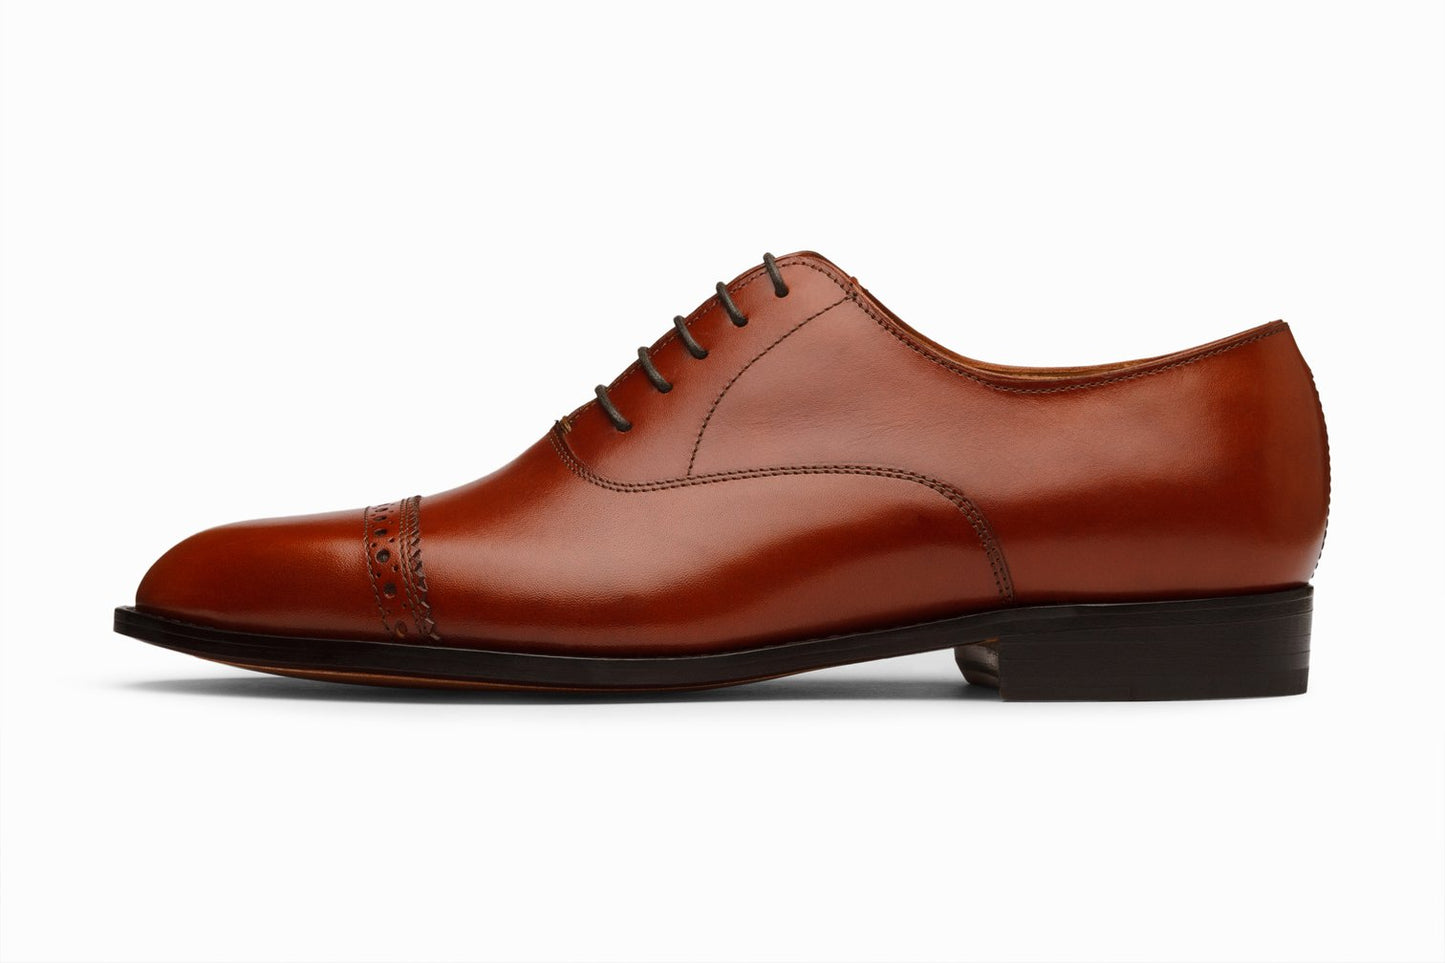 Quarter brogue oxford chestnut, formal shoes for men in Dubai.